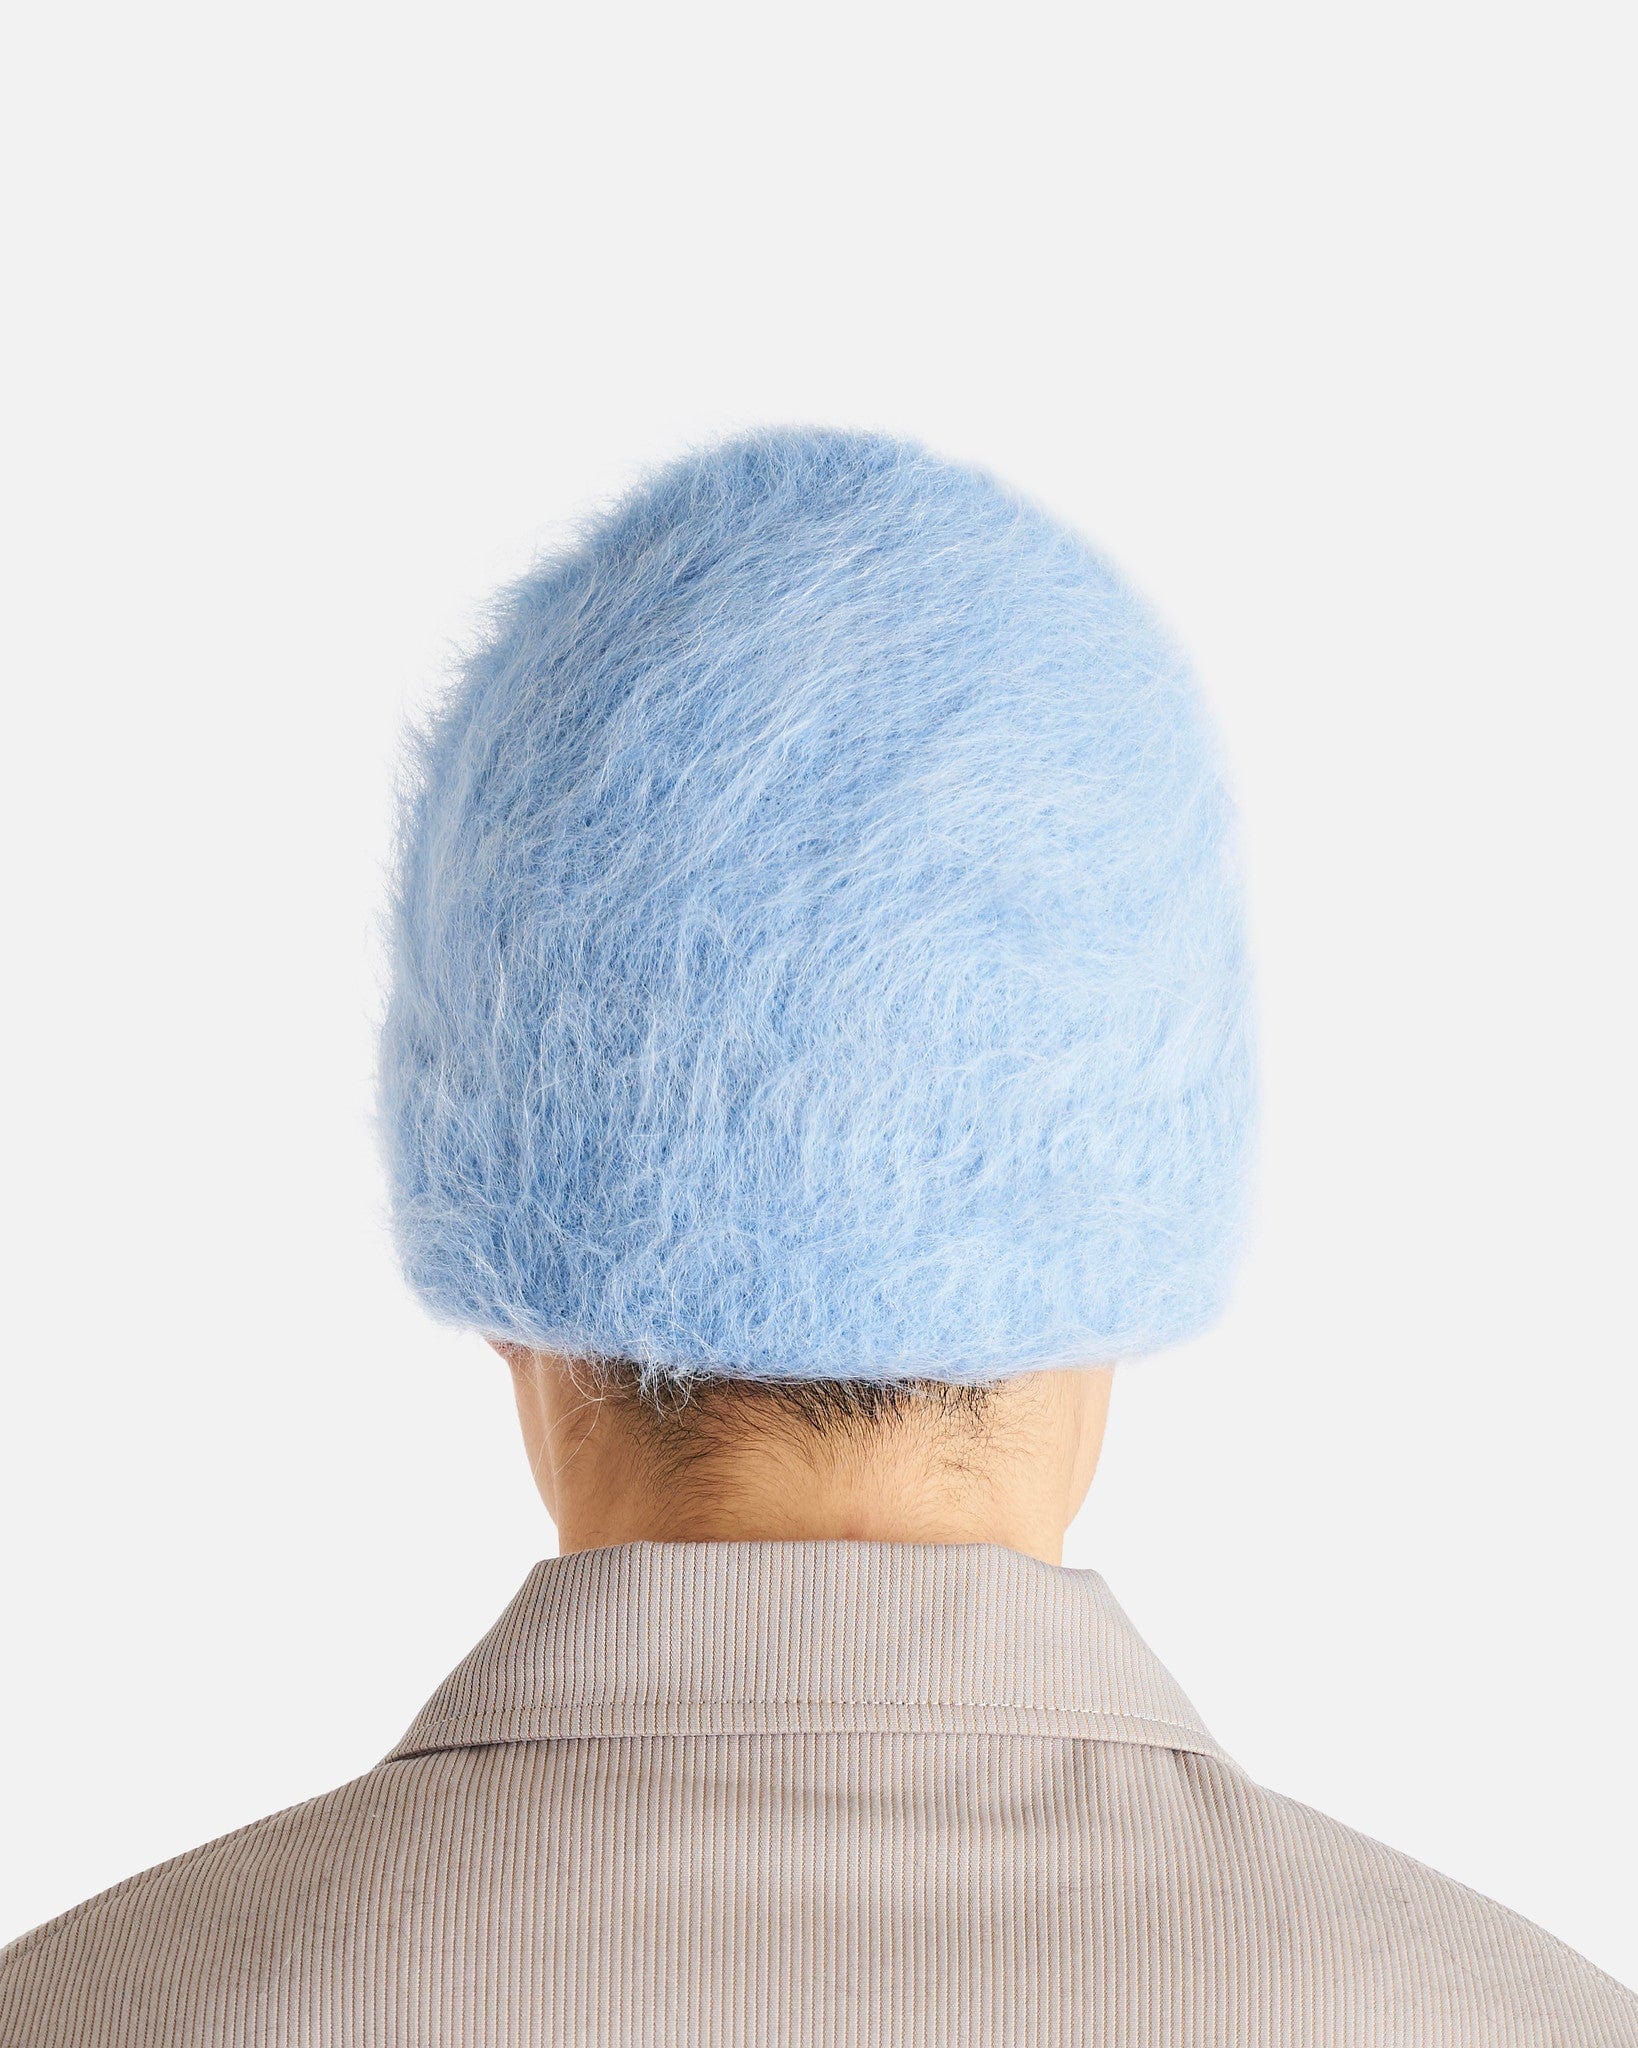 Séfr Men's Hats O/S Fuzzy Beanie in Cold Blue Alpaca